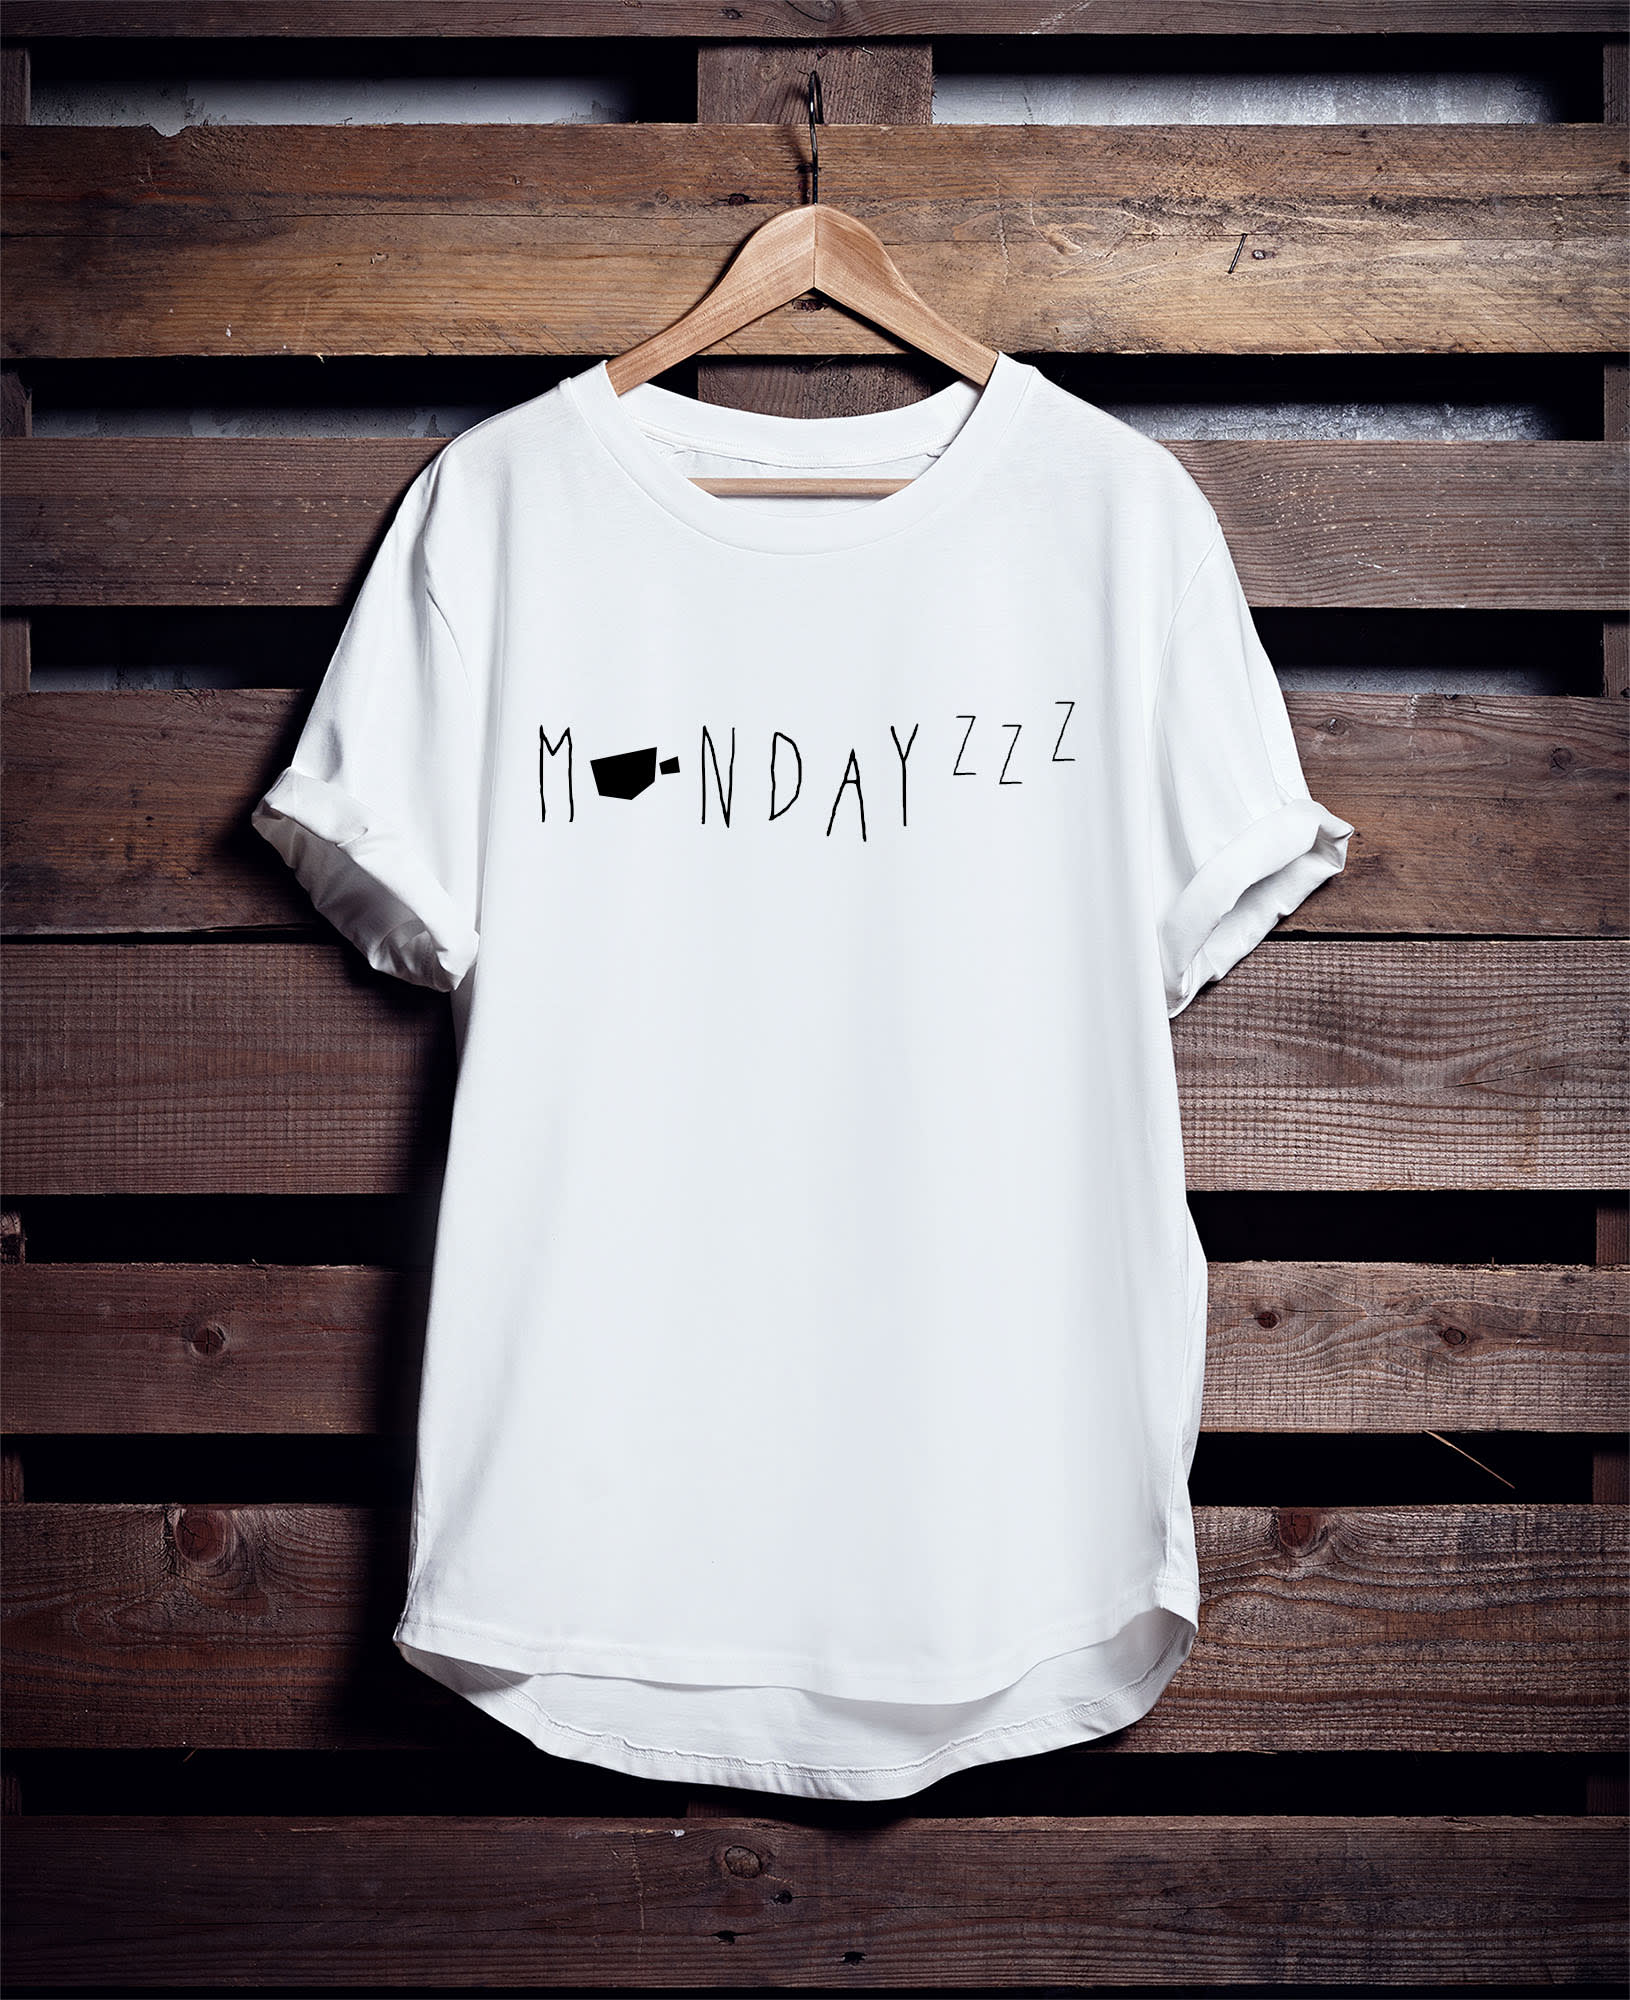 A t-shirt design minimal but creative